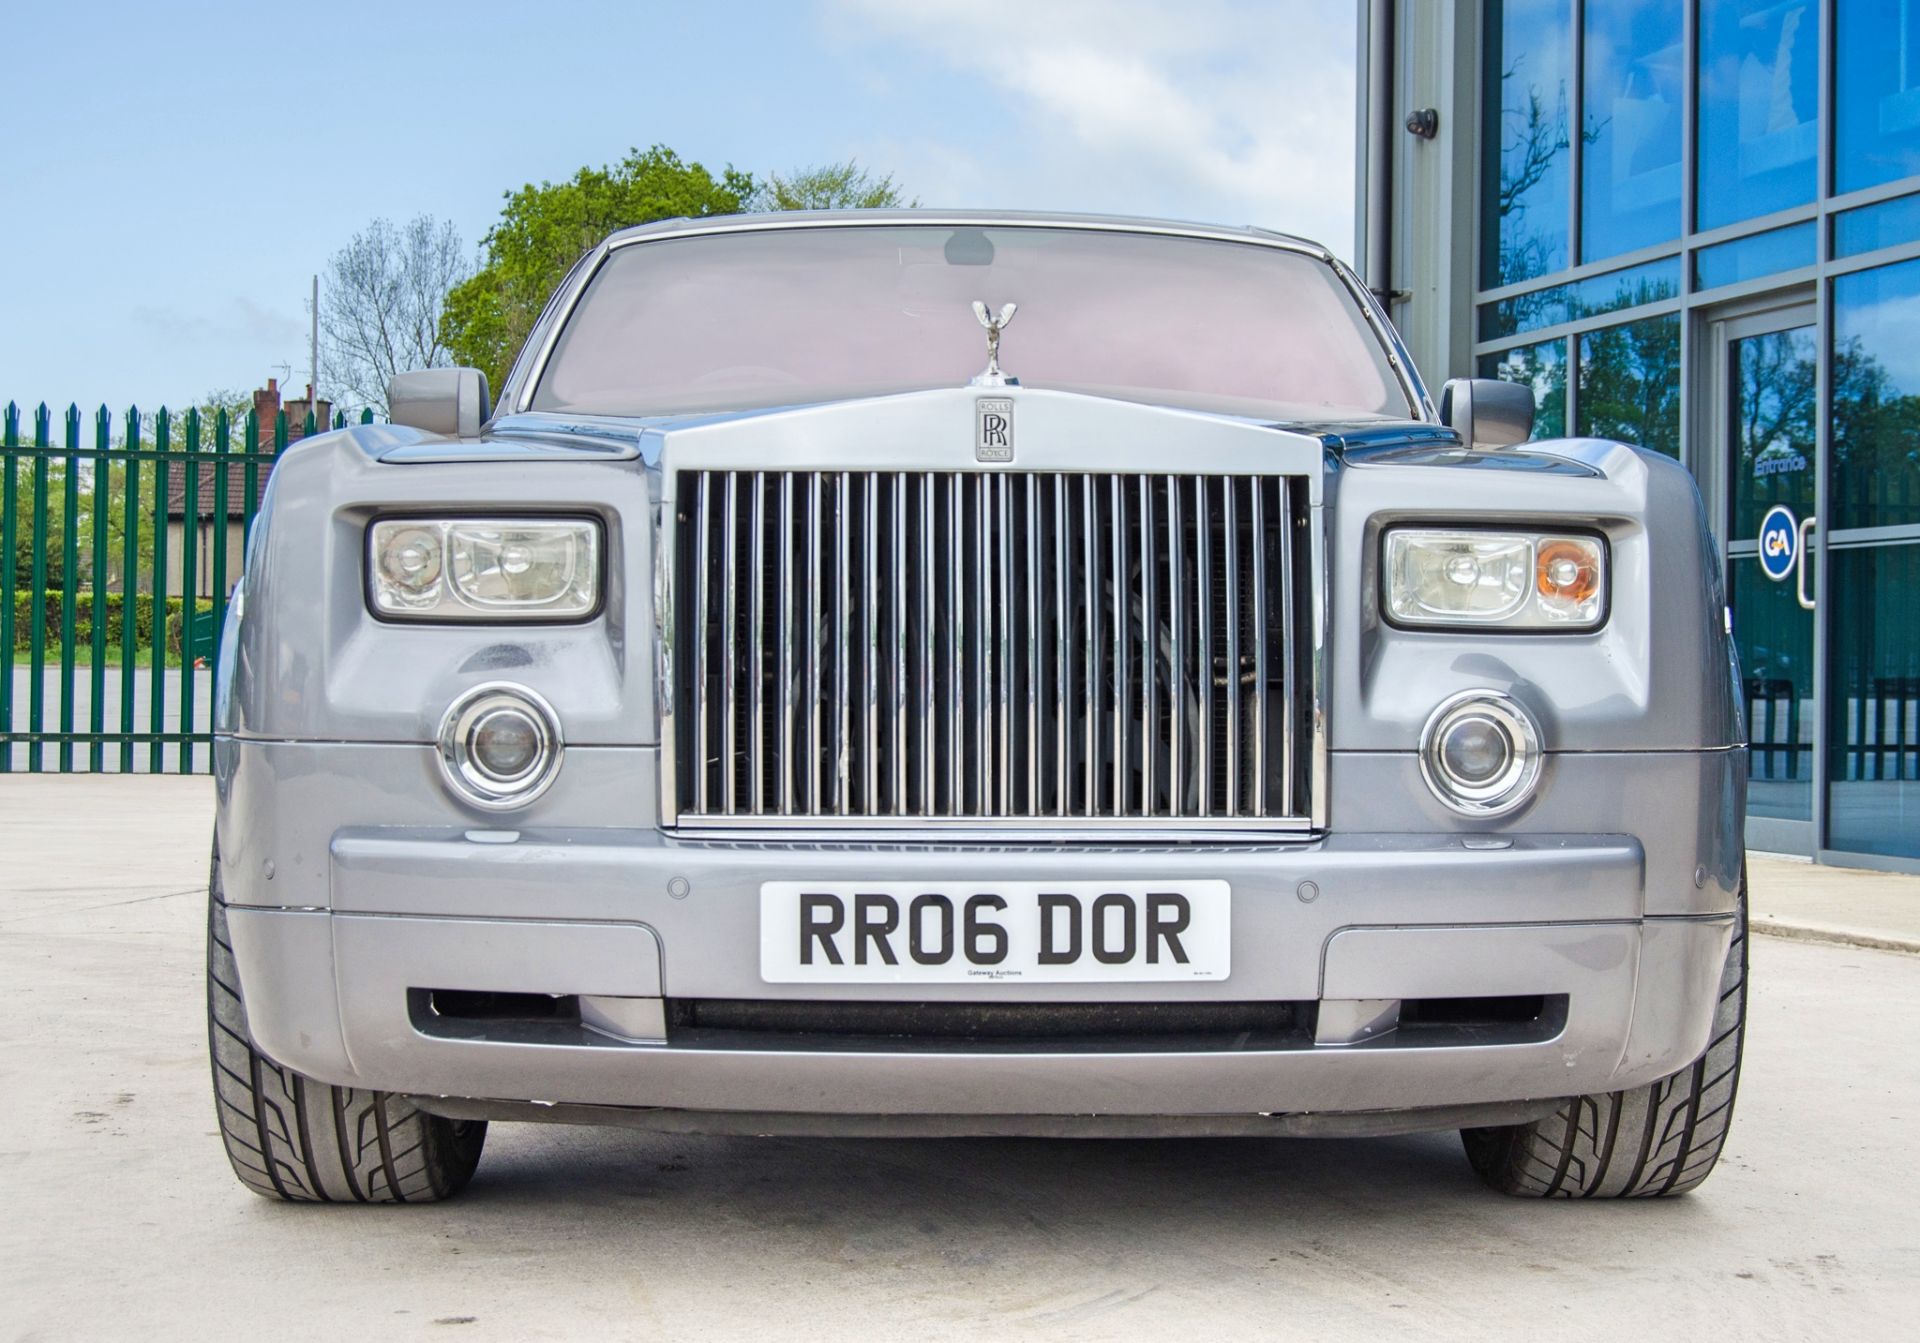 Rolls Royce Phantom 6749cc V12 Auto 4 door saloon car Registration Number: RR06 DOR Date of - Image 9 of 59